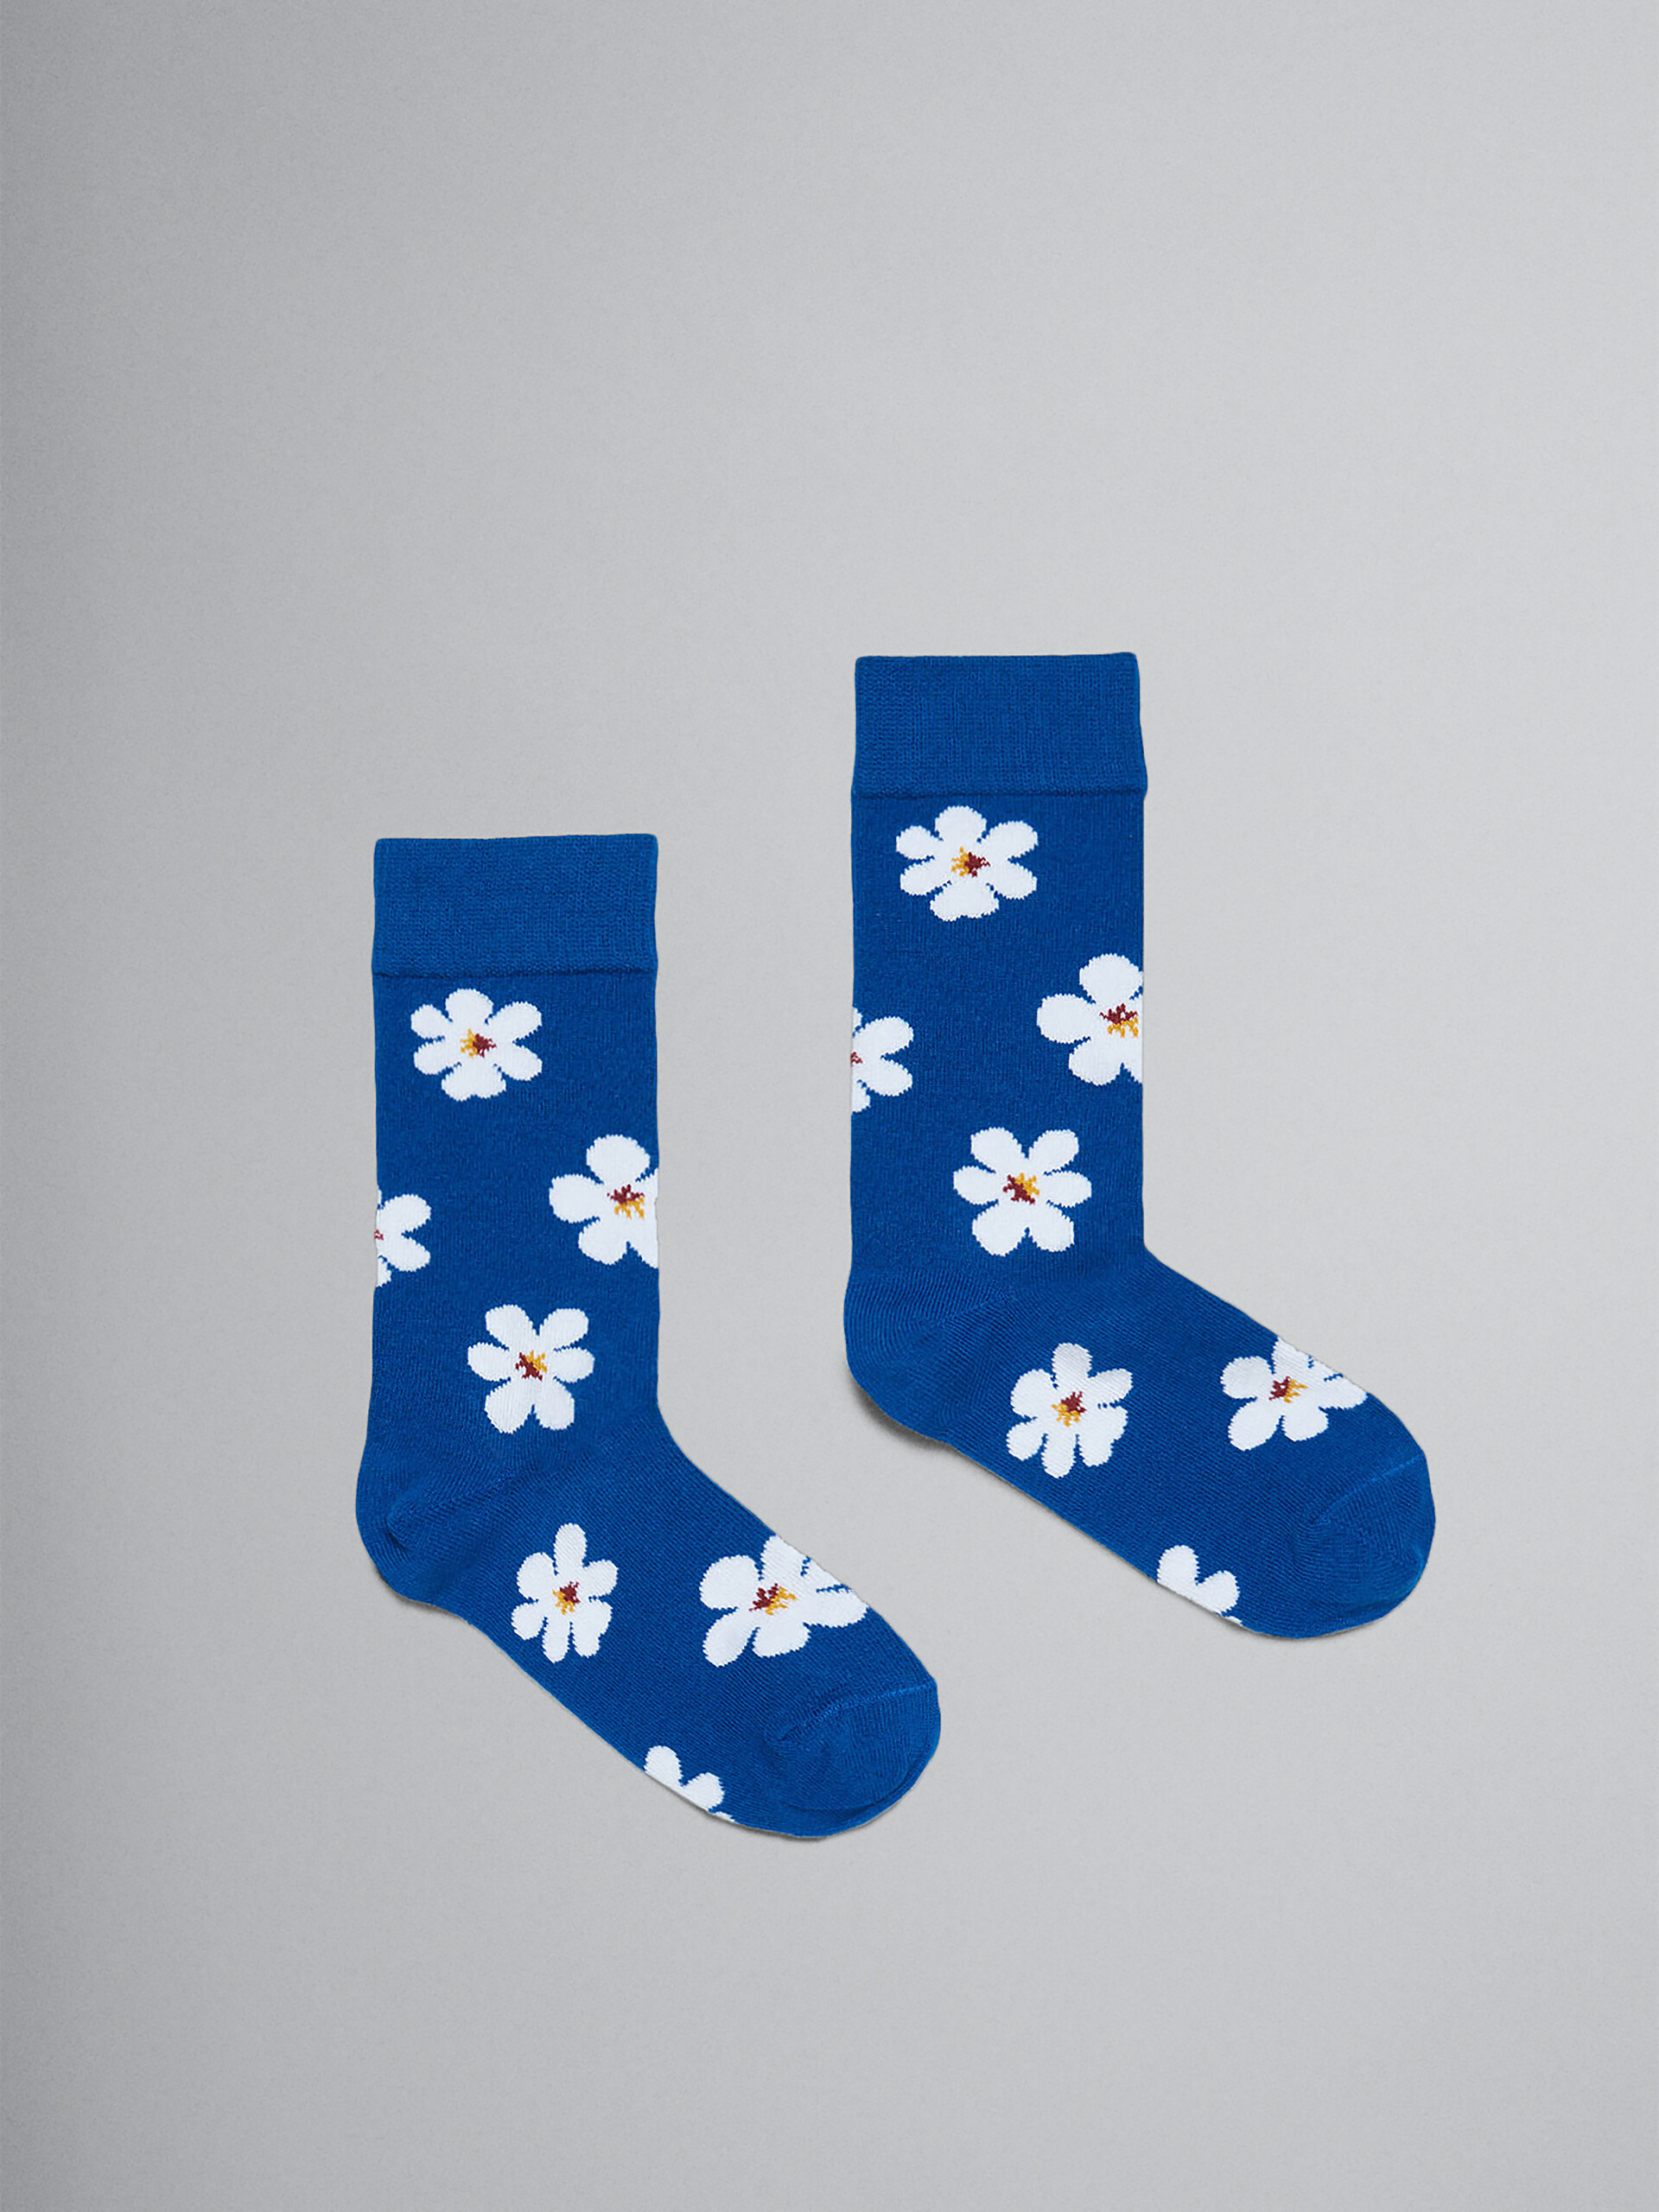 Blue socks with jacquard Daisy motif - Socks - Image 1